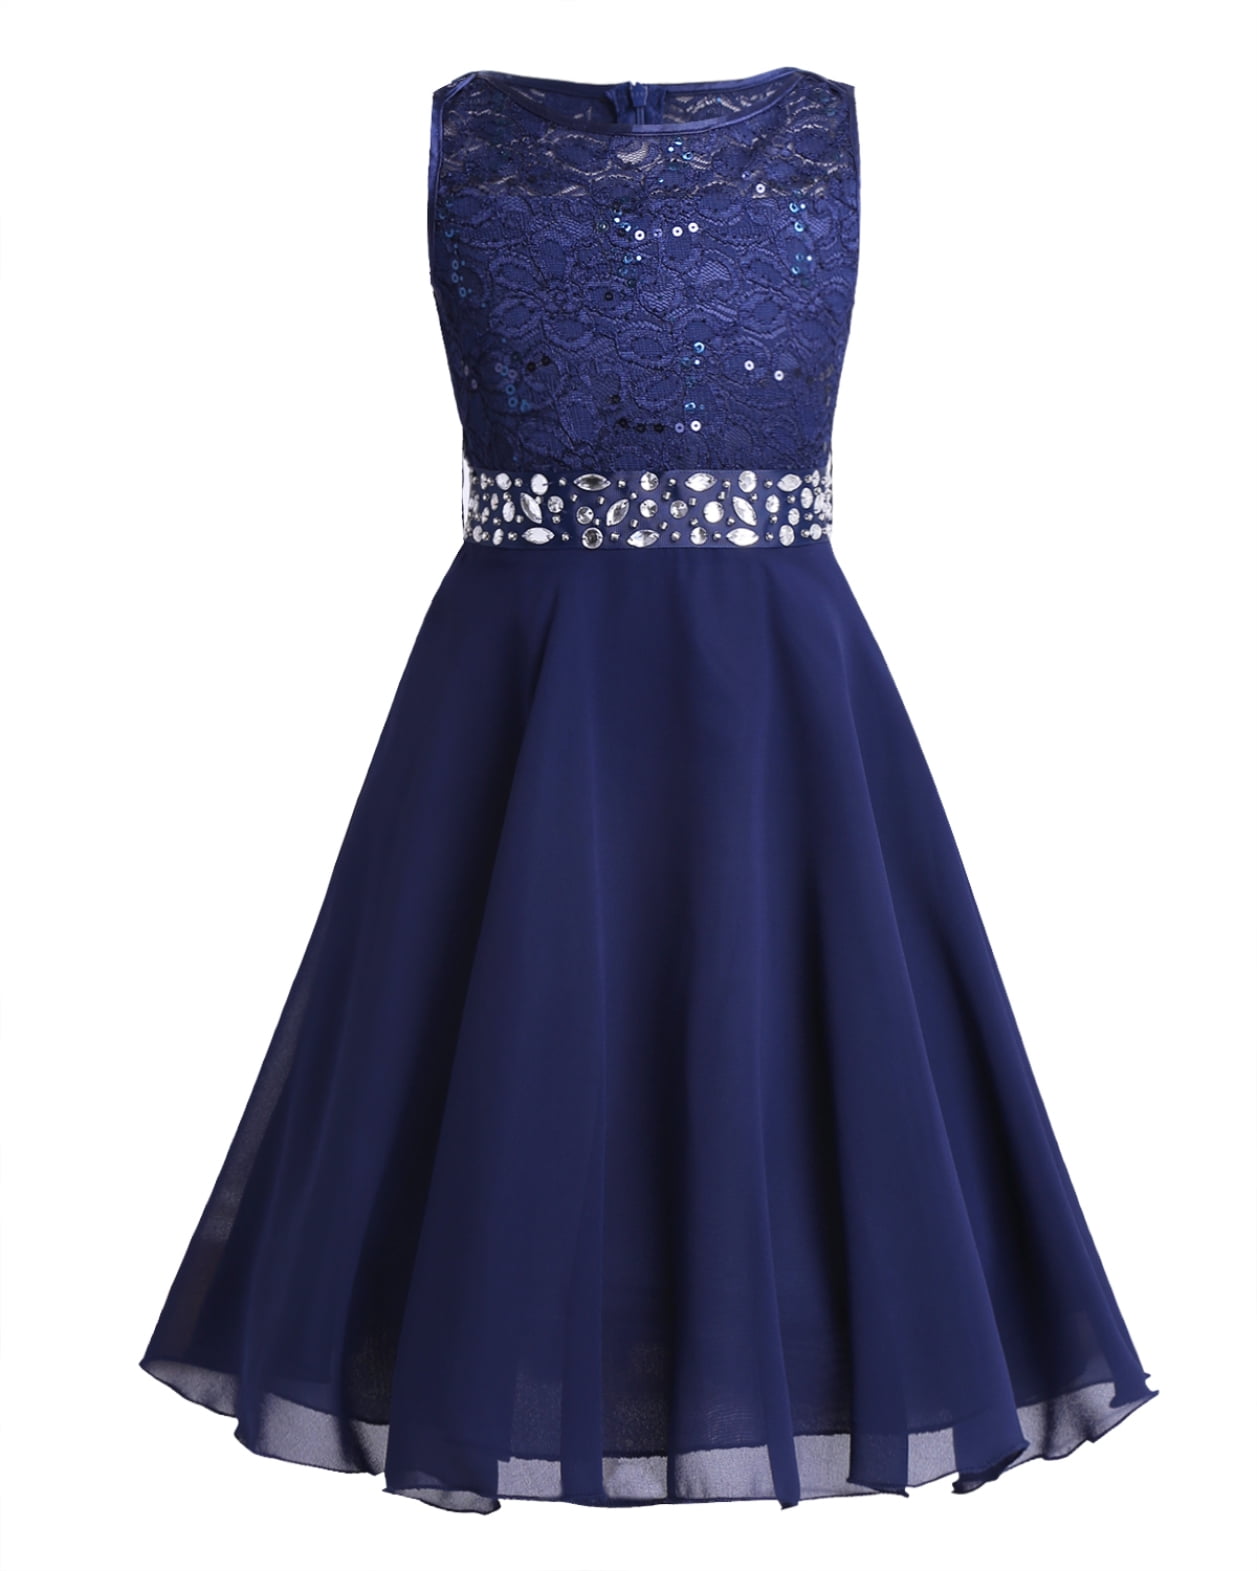 Satin Navy Blue Modest Islamic Clothing Wedding Dress 22840L -  Neva-style.com